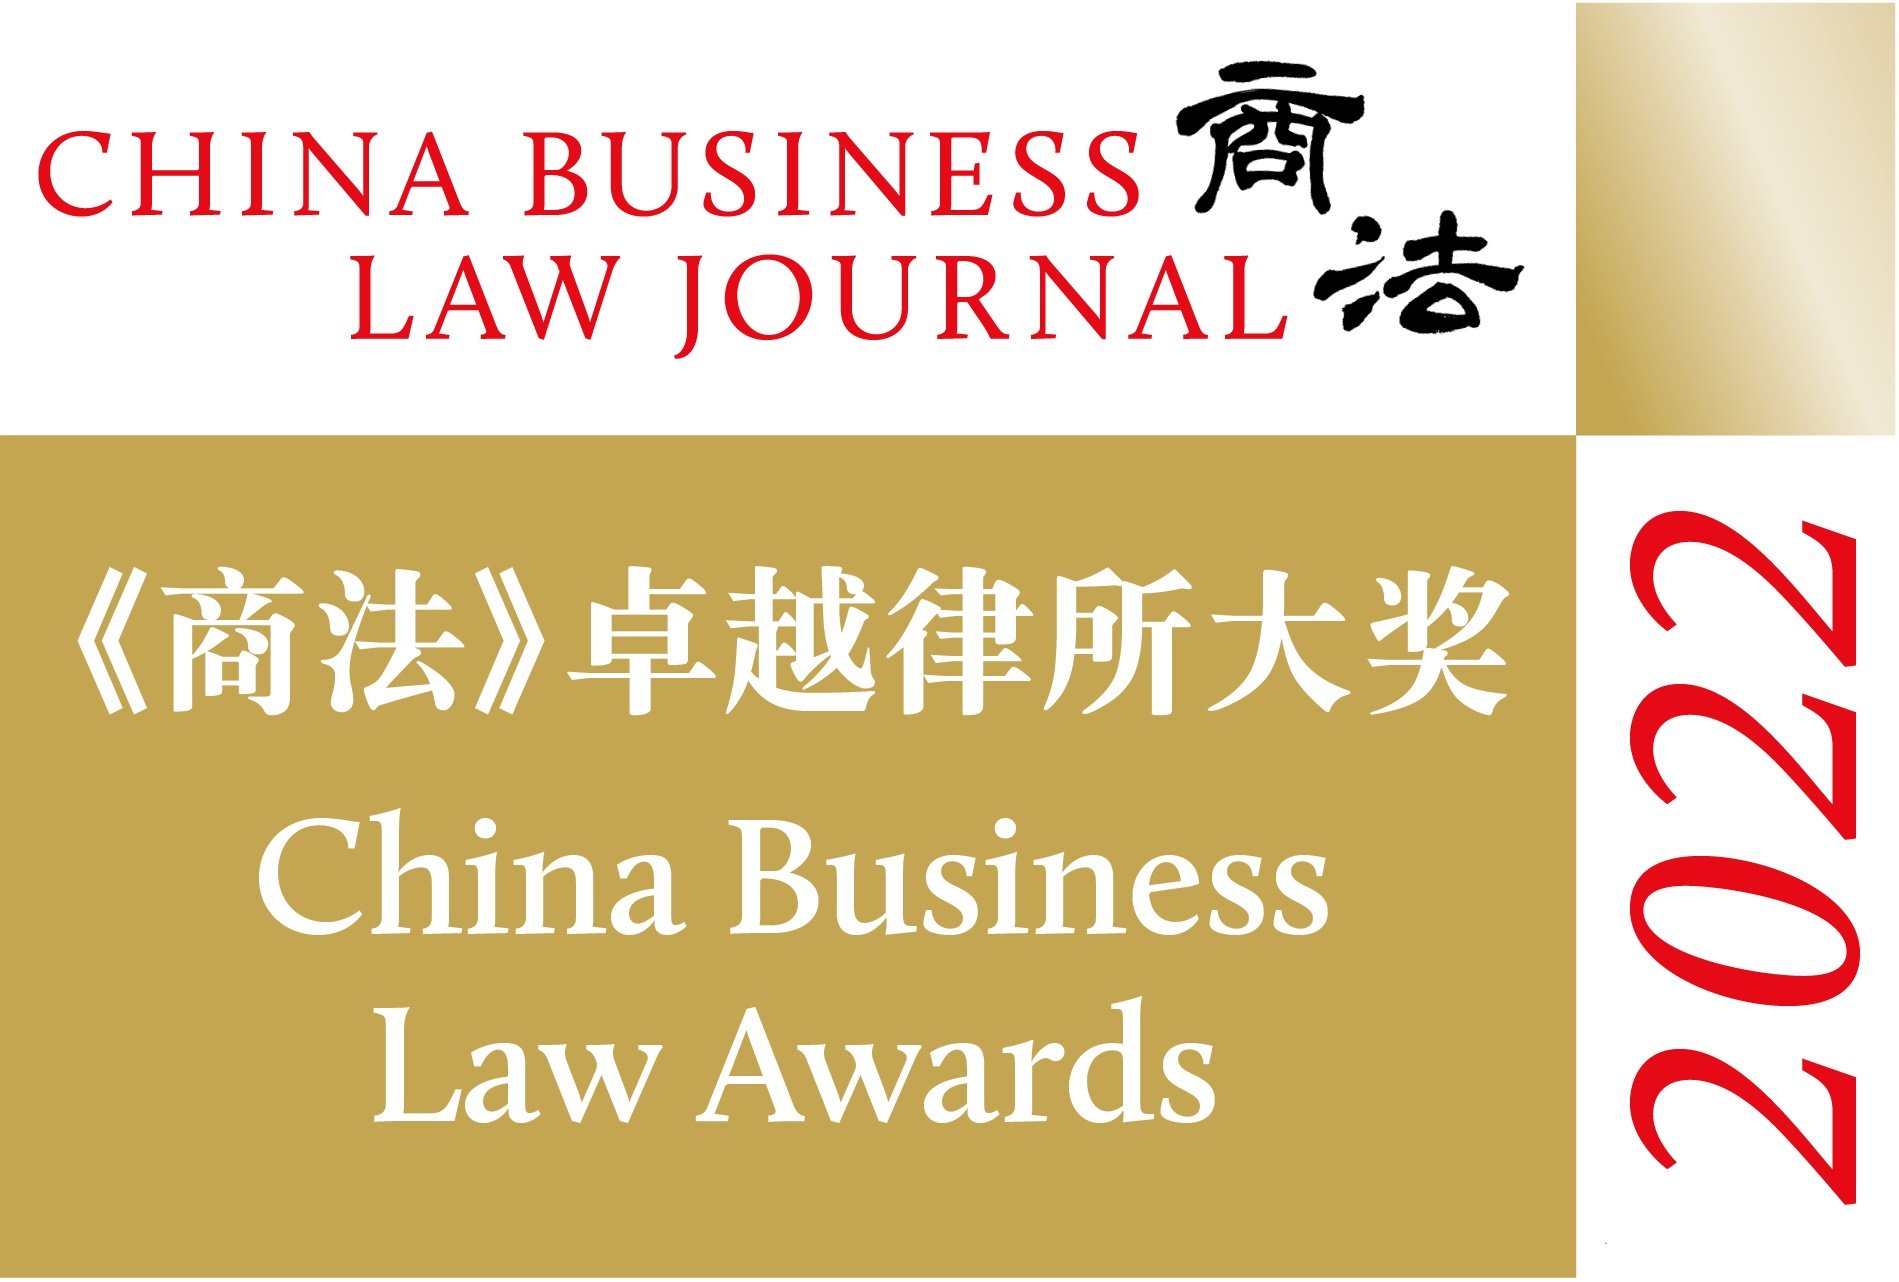 China Business Law Awards Winner 2021